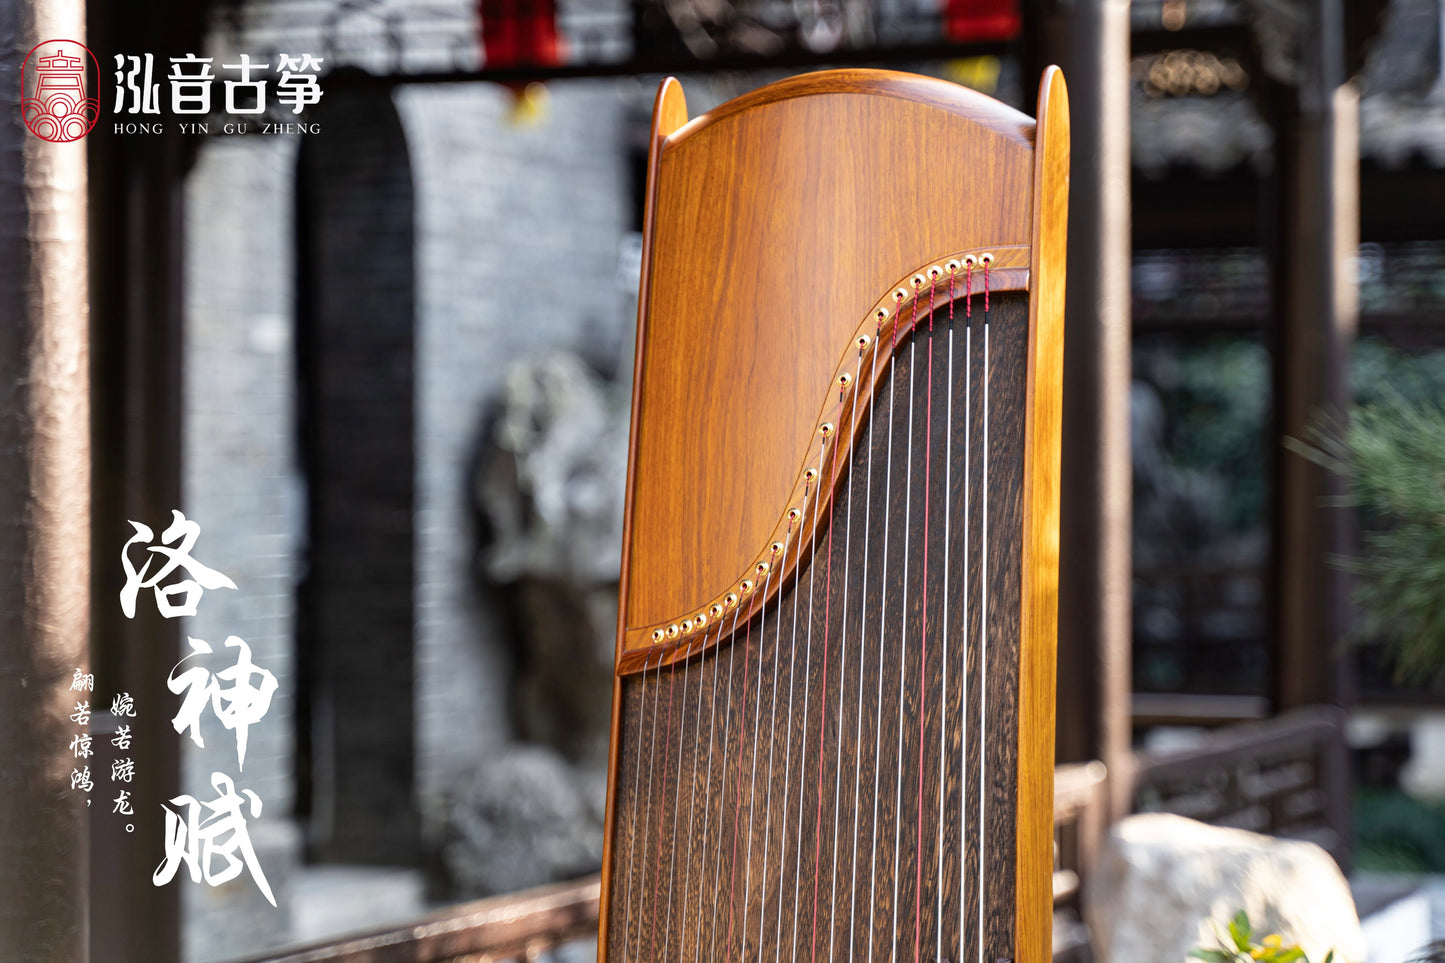 Chinese music store - premium guzheng carefully-picked by Guzheng expert Qing Du, guzheng lessons near me, guzheng for sale worldwide, 高性价比挖筝, 整挖古筝, 买古筝, 学古筝, 古筝老师